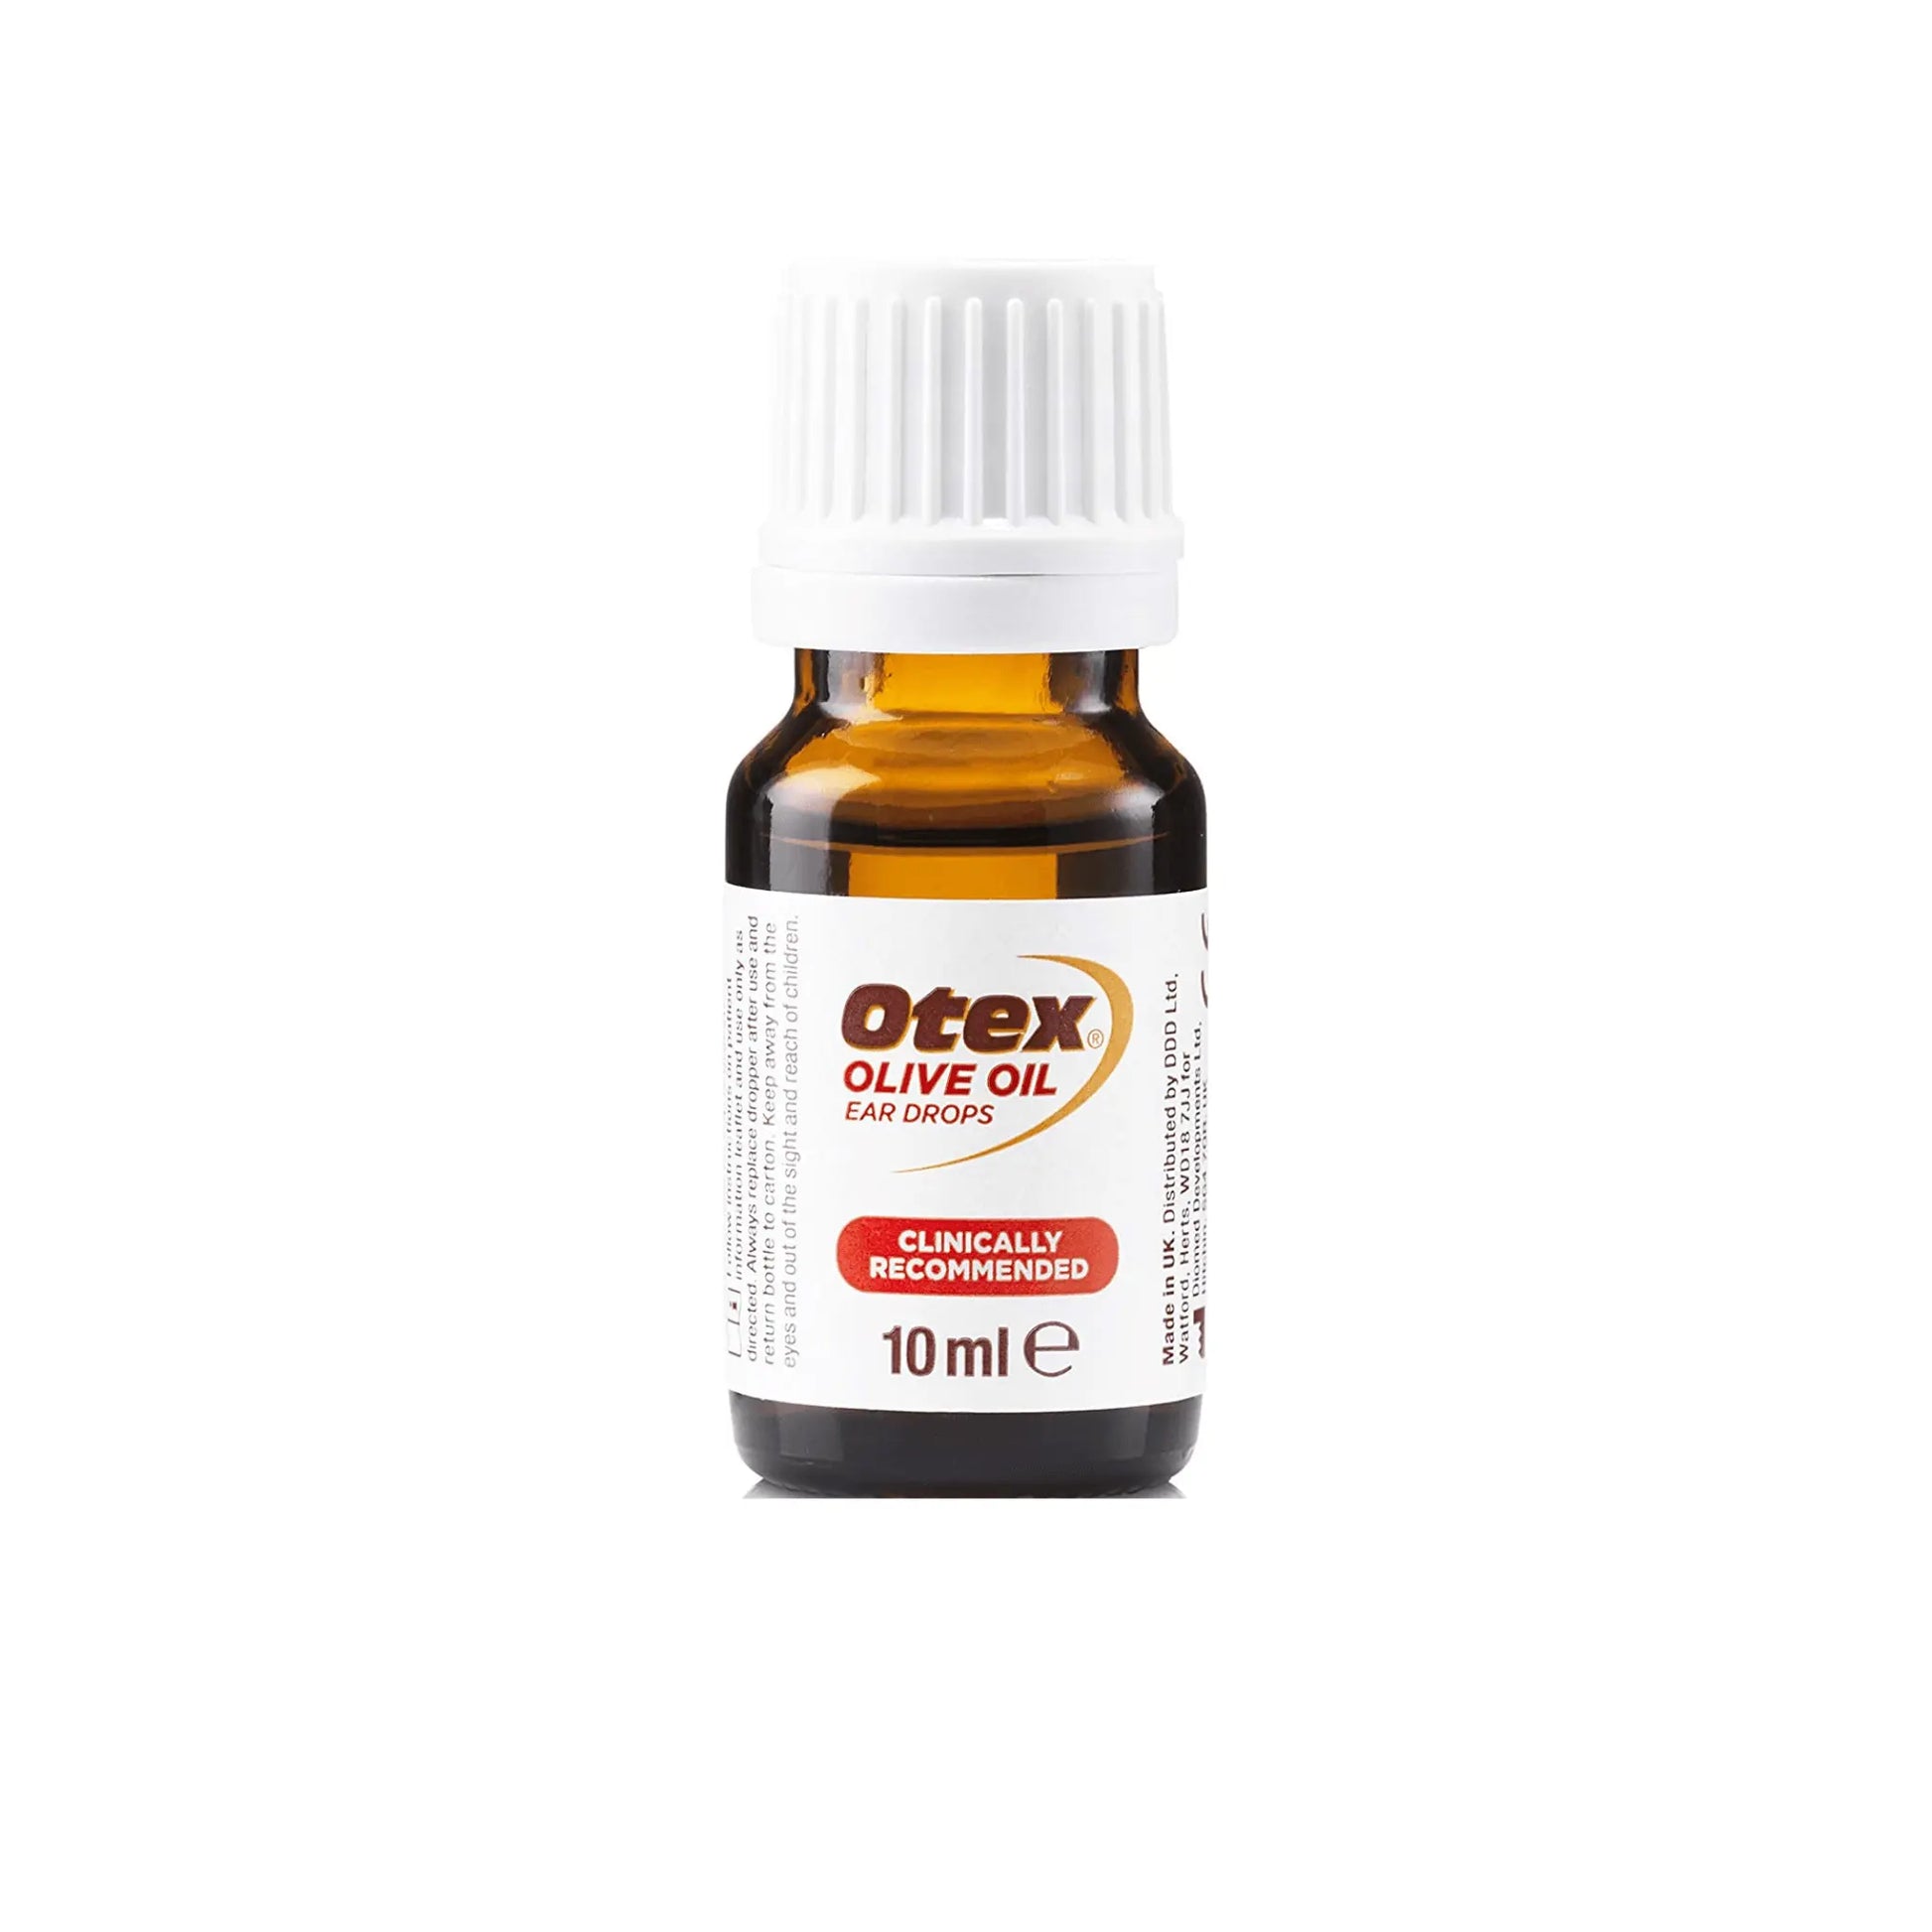 Otex Olive Oil 10ml Ear Drops - Arc Health Nutrition UK Ltd 